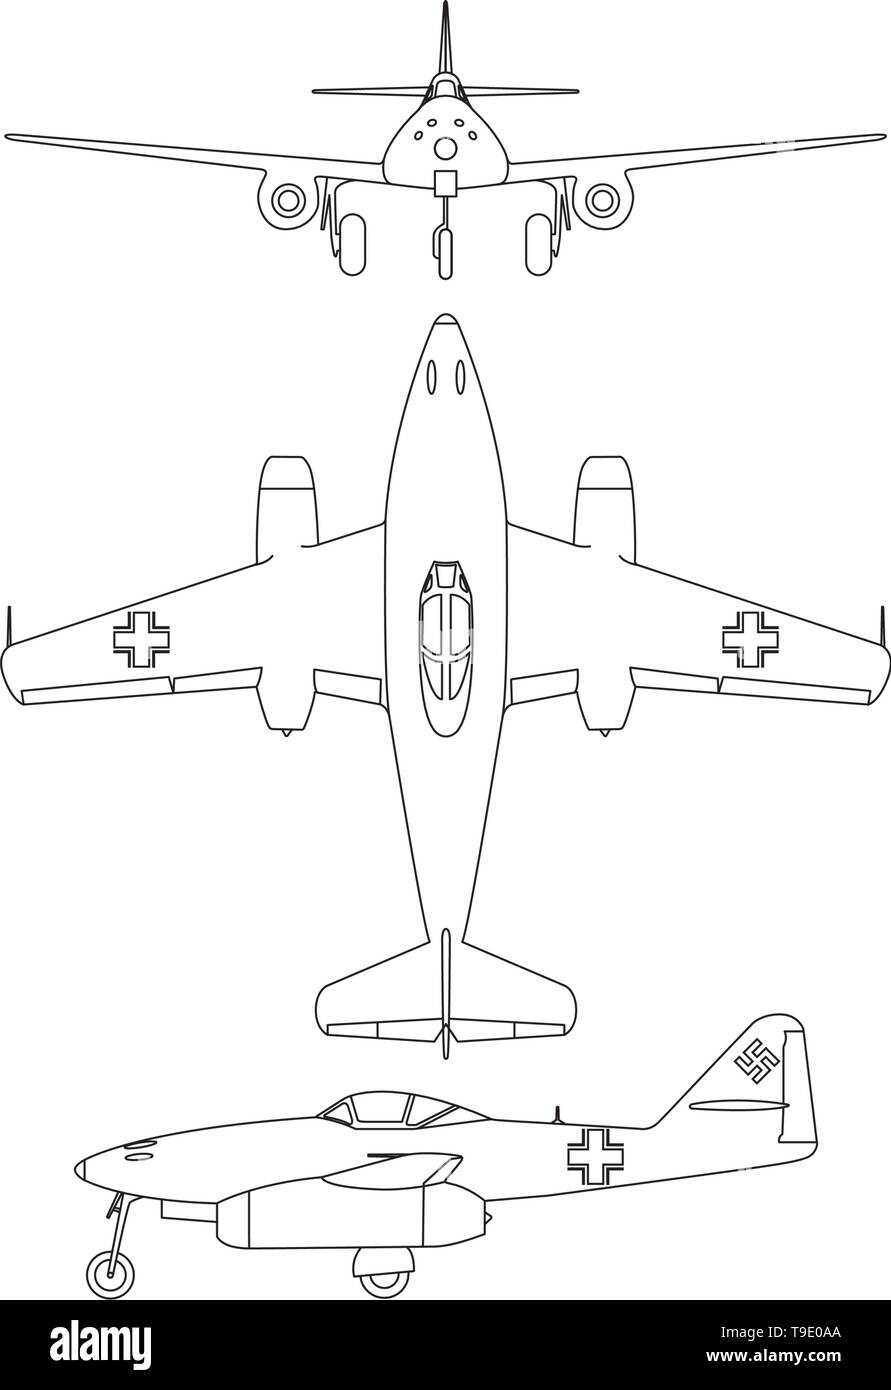 Turbine world war 2 airplane blueprint line vector illustration Stock Vector